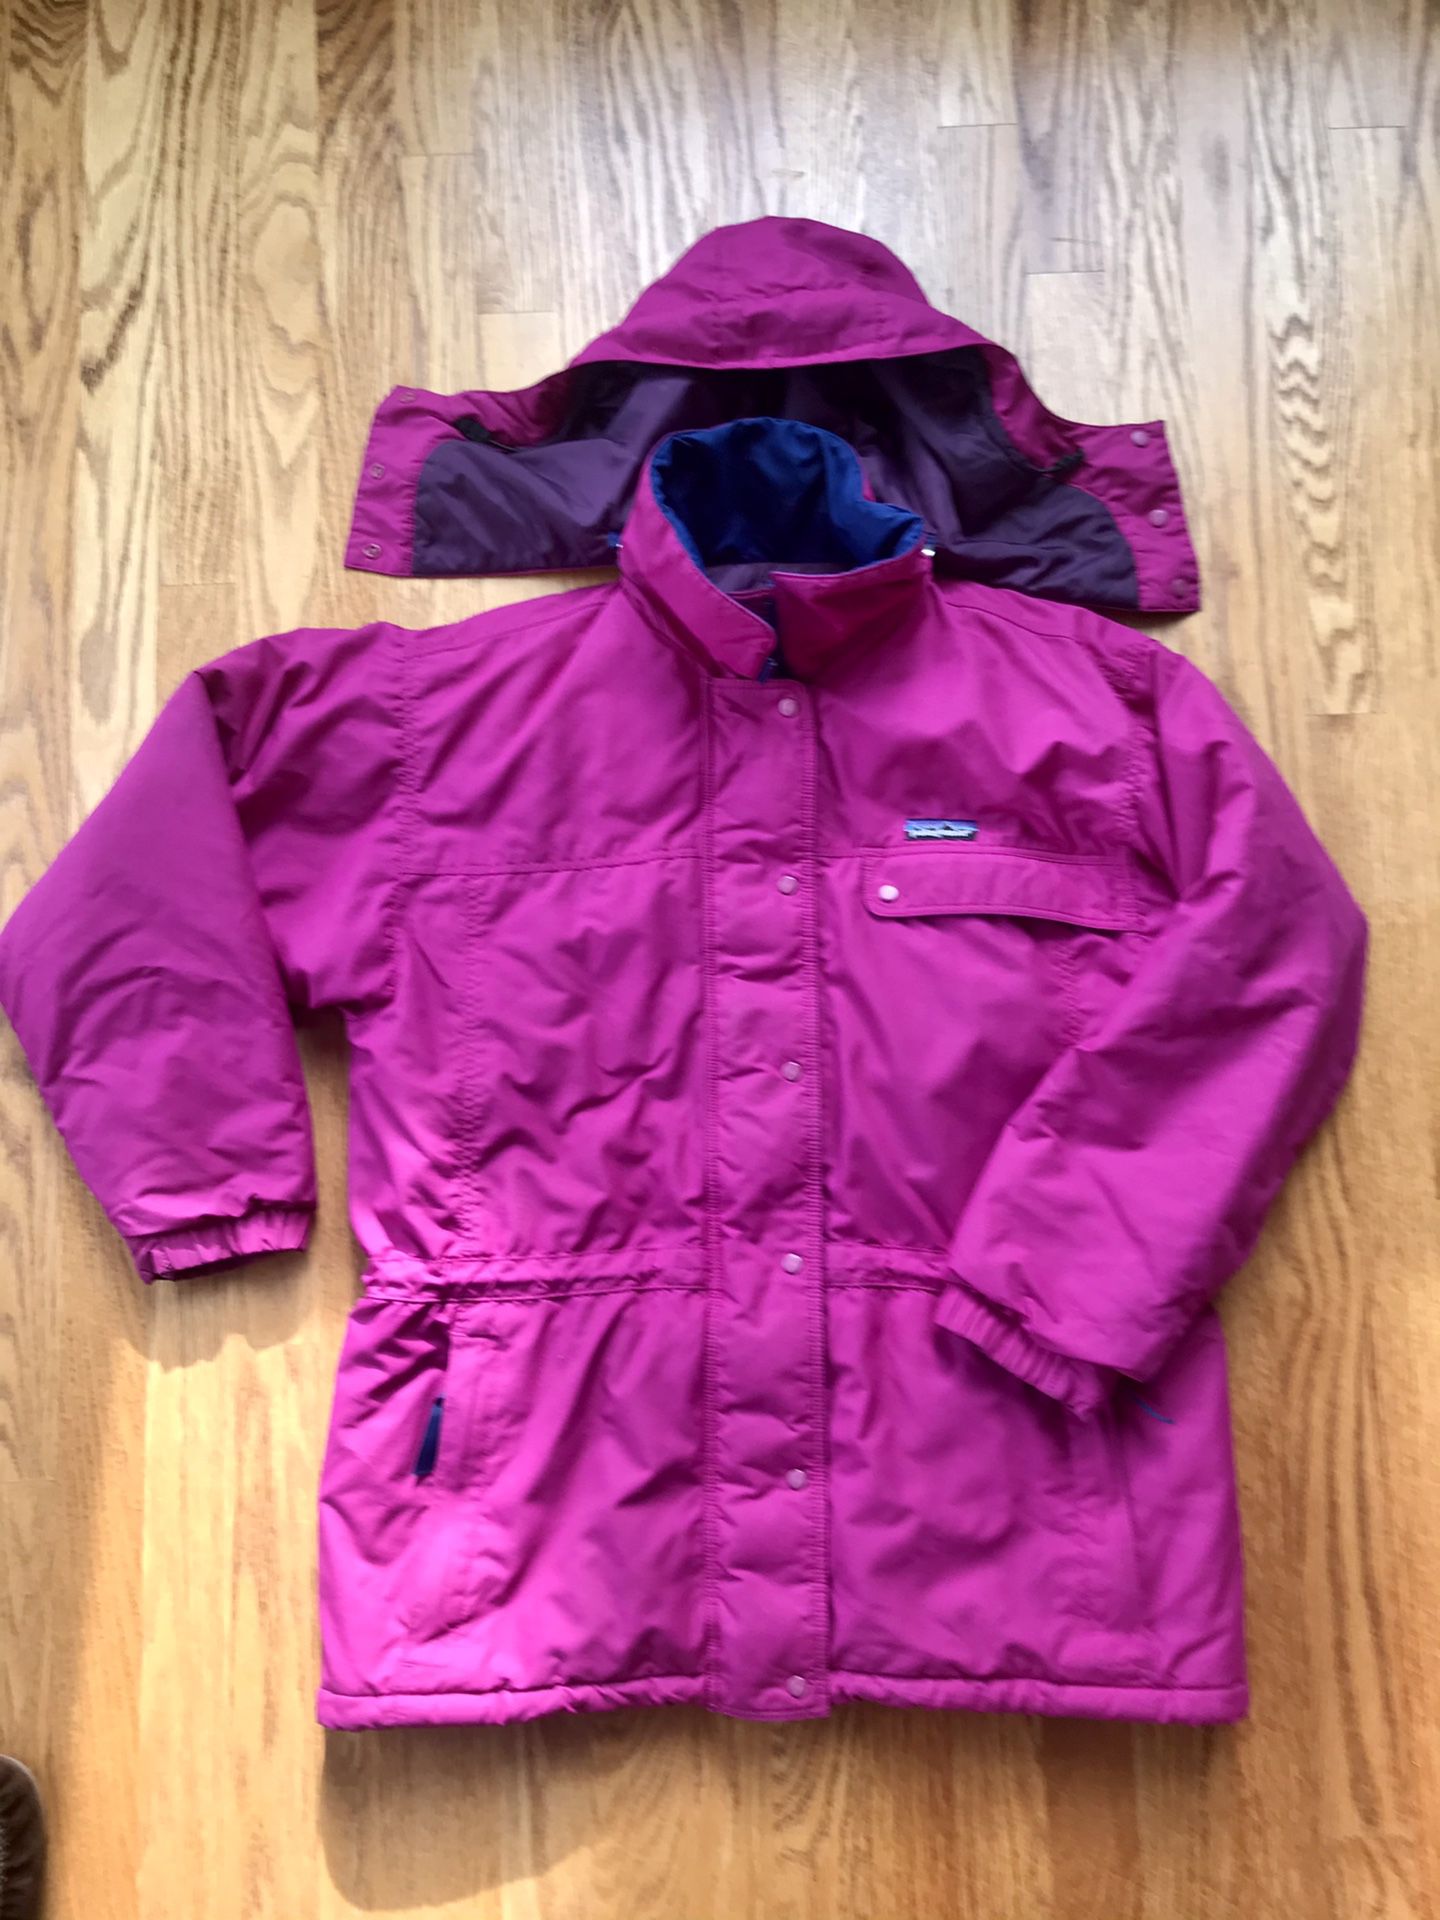 Patagonia Winter Jacket - Women’s Size 10 - With Zip-off hood